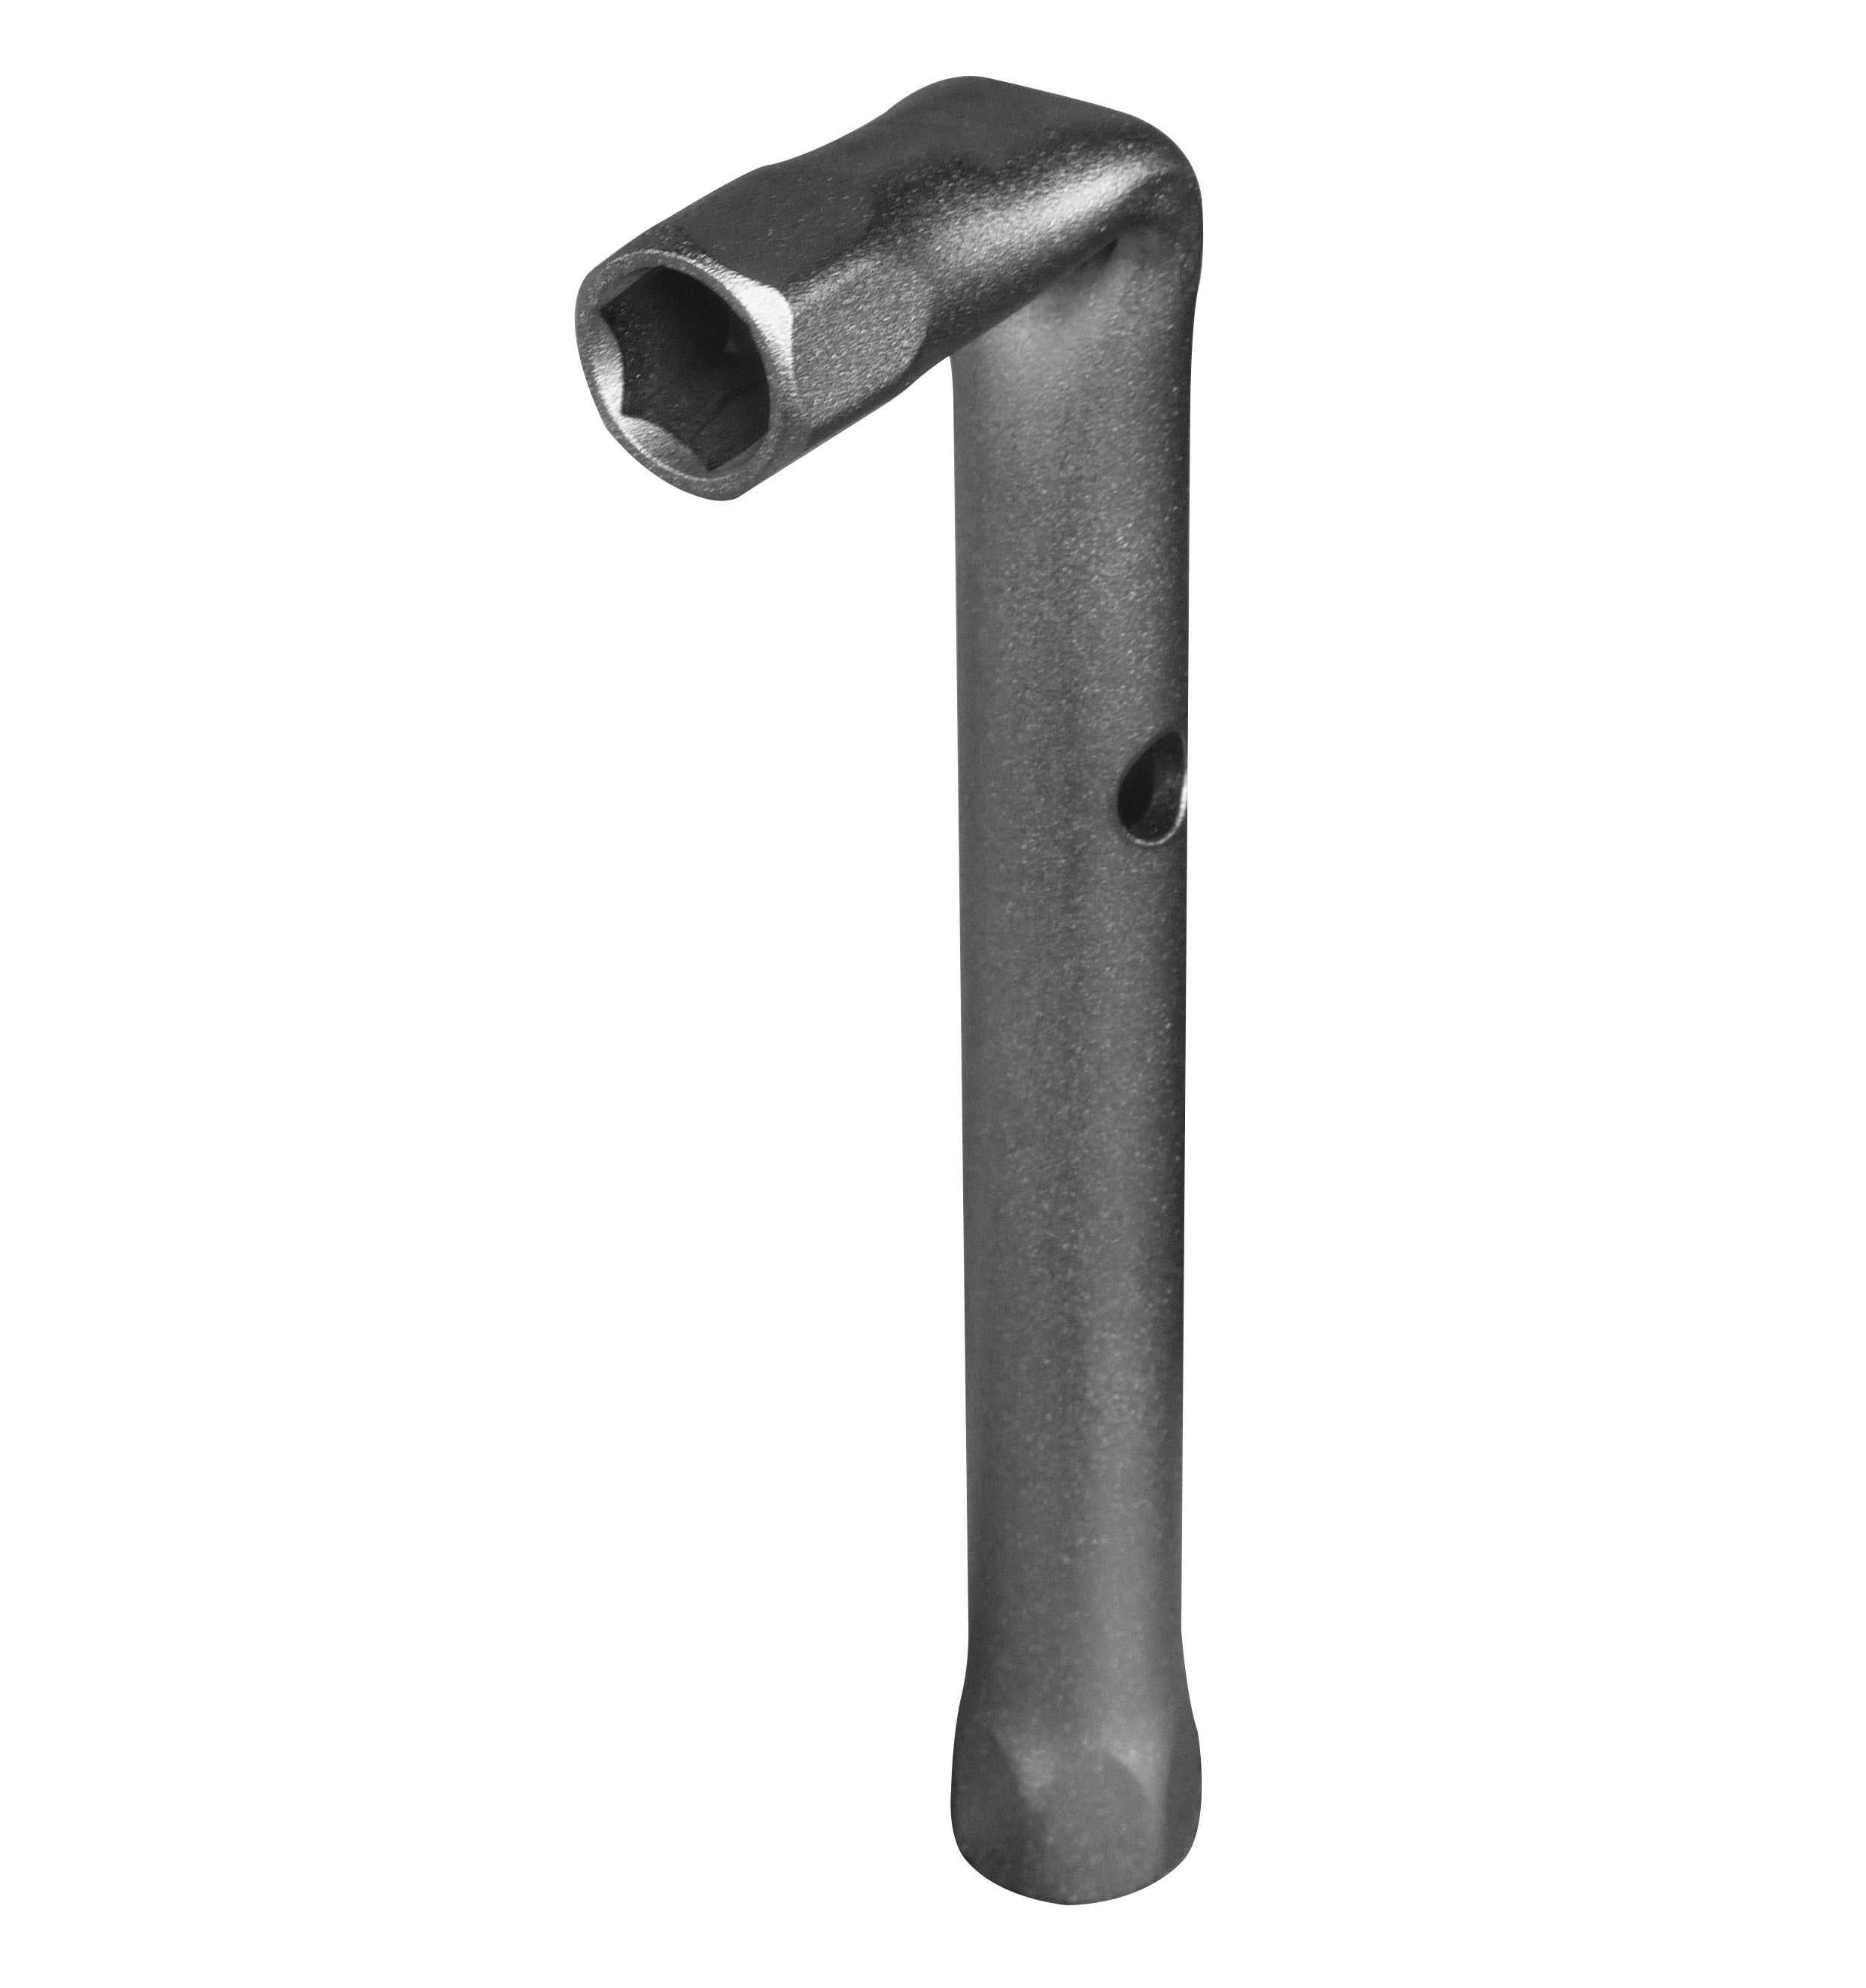 Cle a pipe 21mm kenston ❘ Bricoman